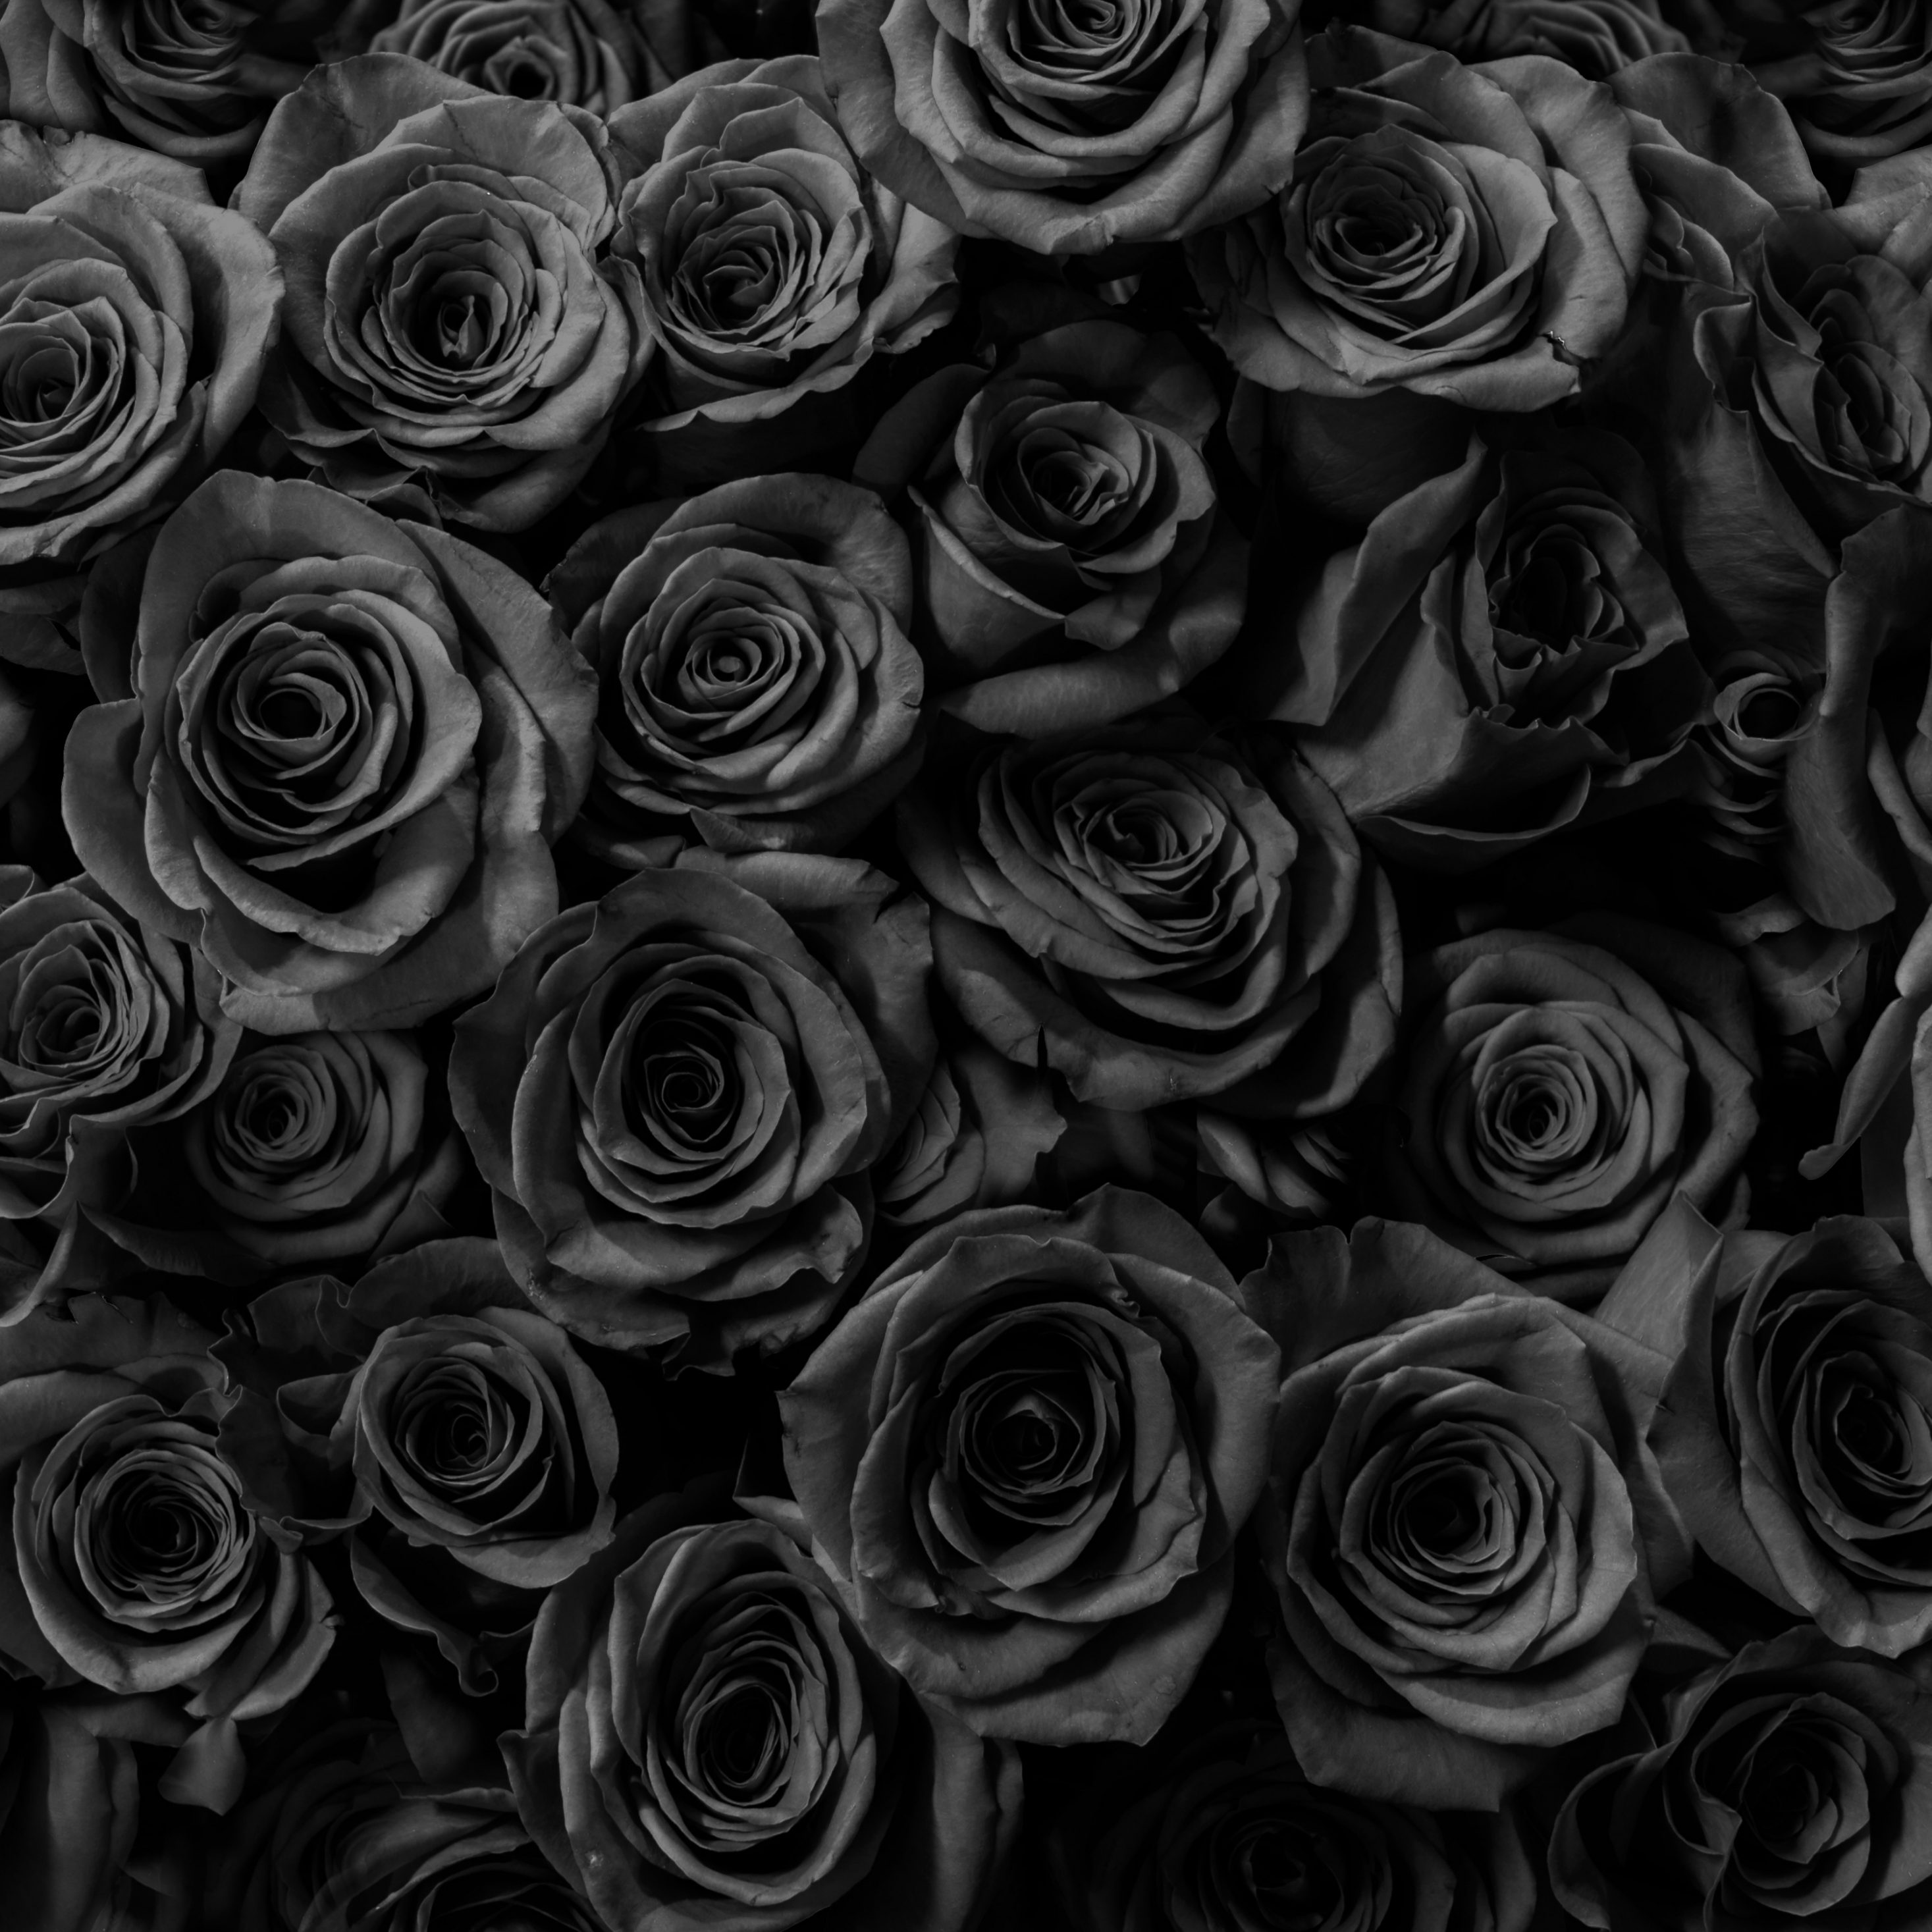 2934x2934 iOS iPad wallpaper 4k Black Roses Gift Anniversary iPad Wallpaper 2934x2934 pixels resolution